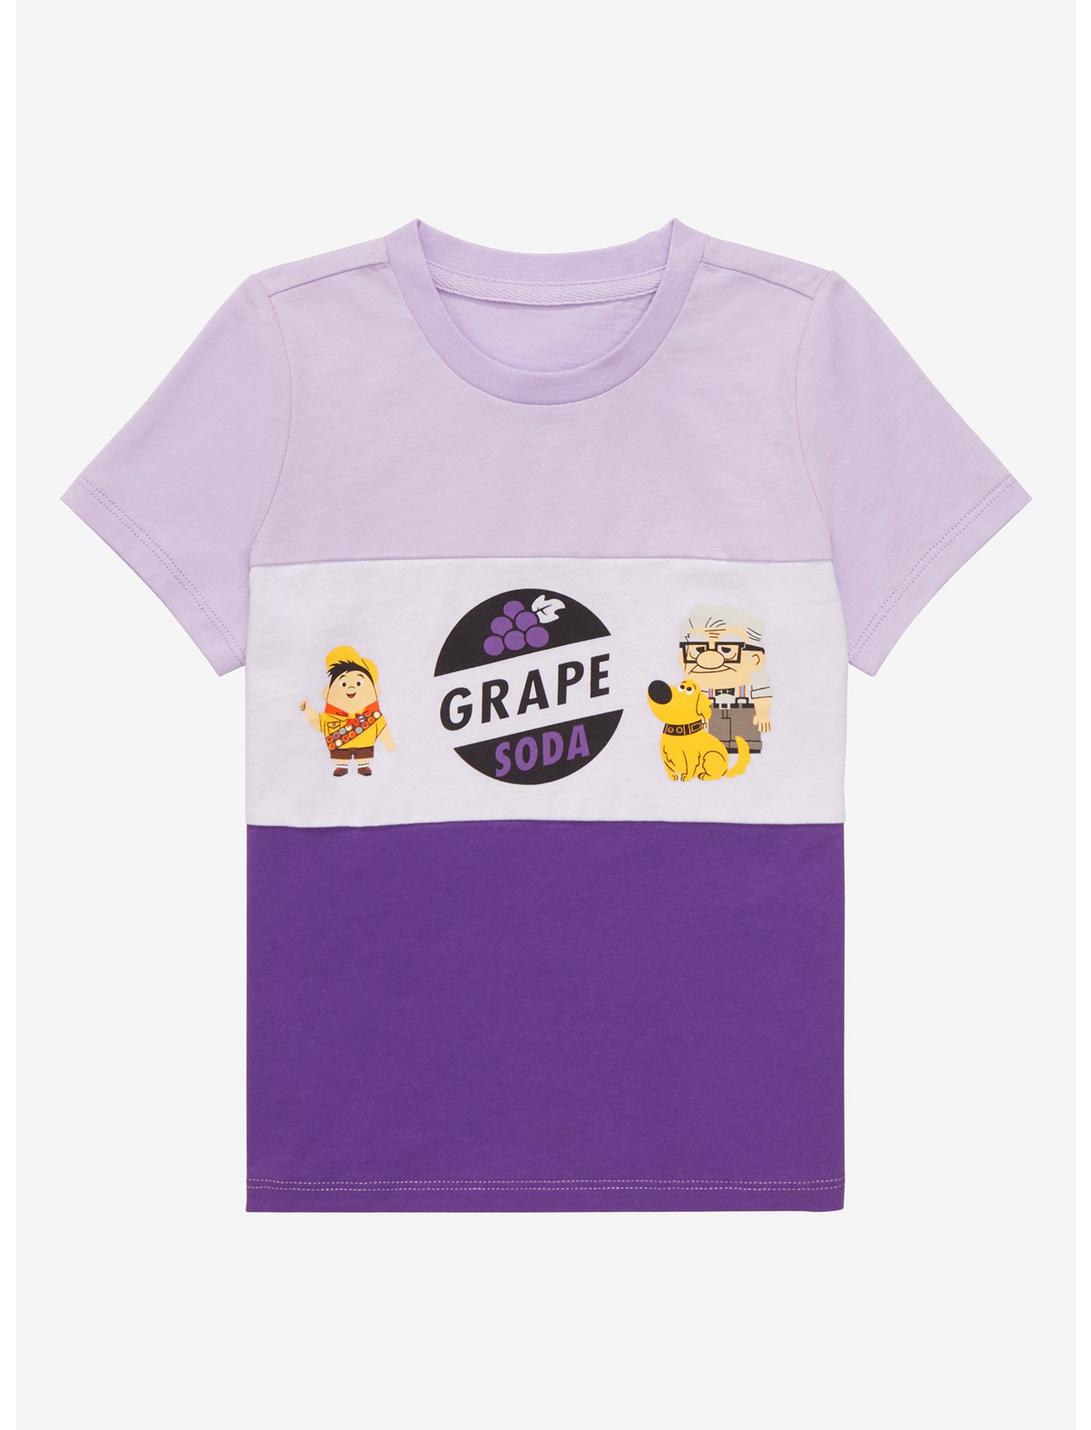 Disney Parks Pixar  Up Grape Soda Bottle Cap  T-Shirt  Girls Small  New W Tag 